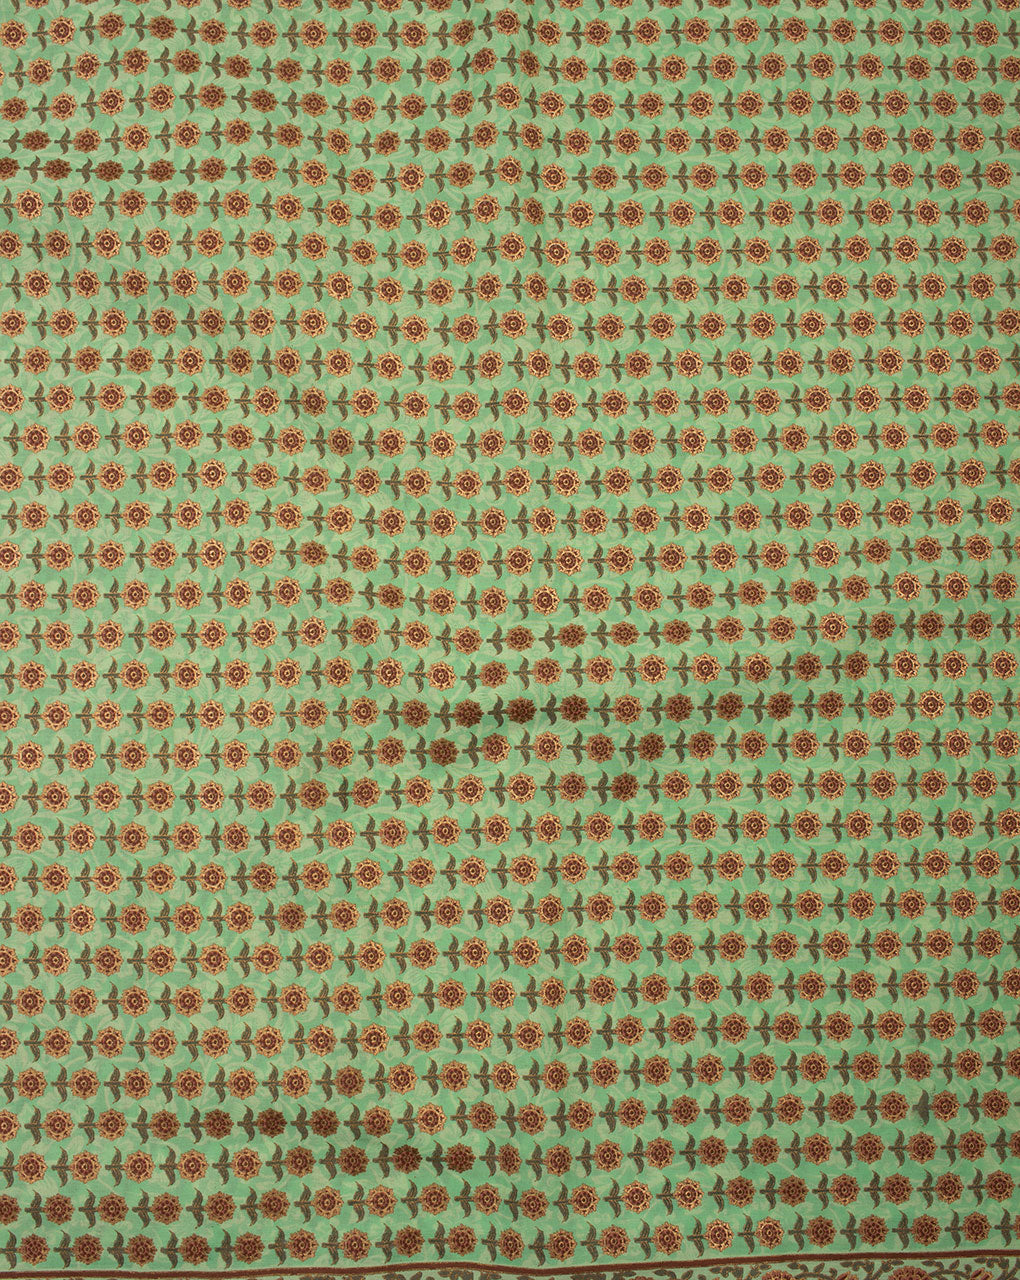 Foil Screen Print Cotton Fabric - Fabriclore.com